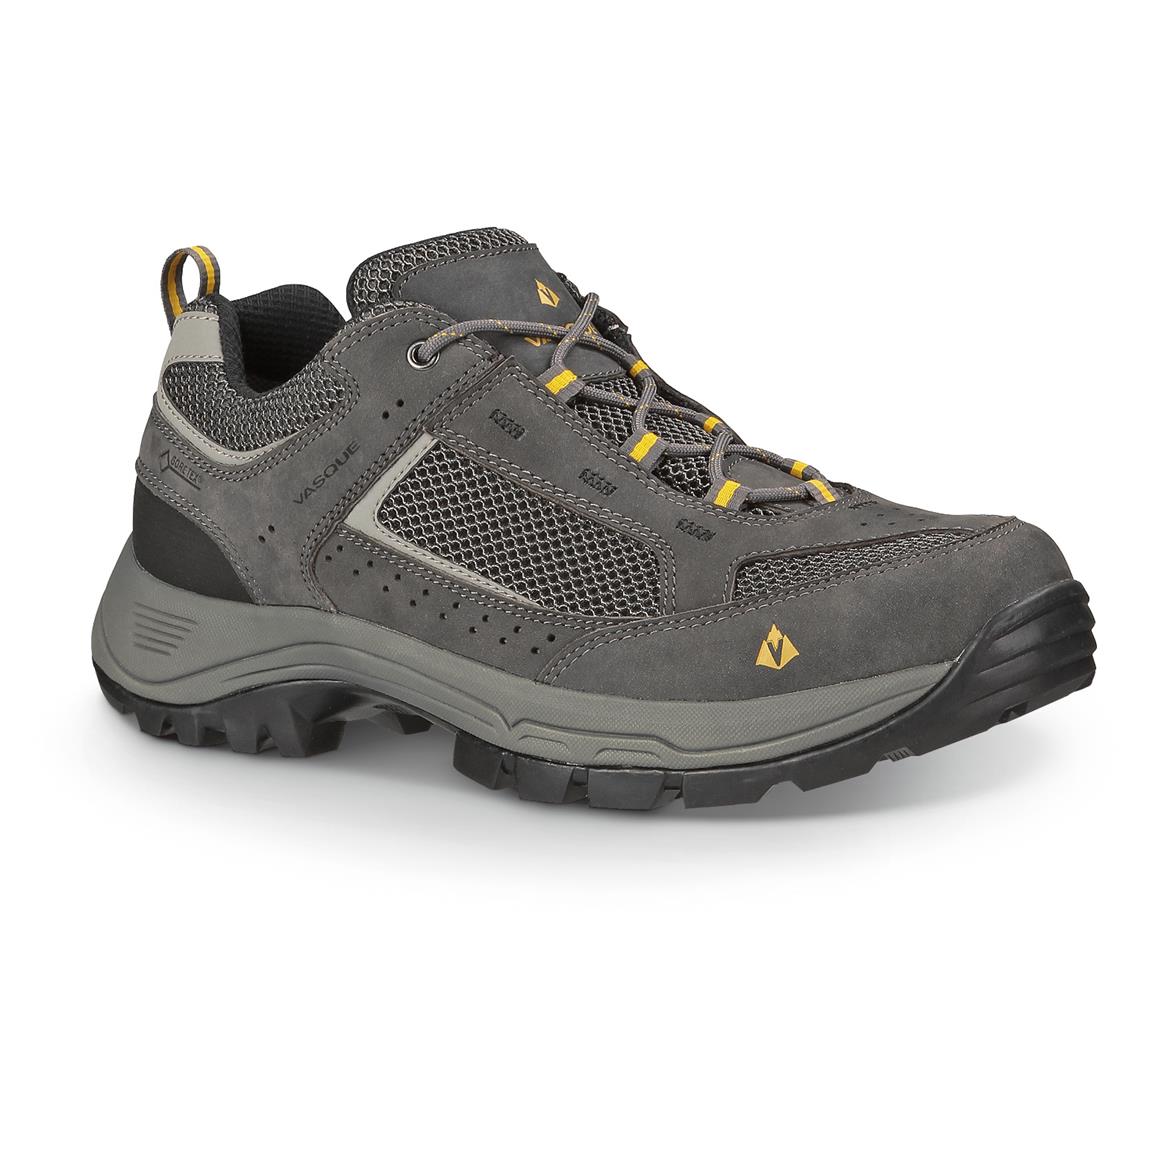 Vasque Men's Breeze 2.0 Low GTX Hiking Shoes - 675729, Hiking Boots ...